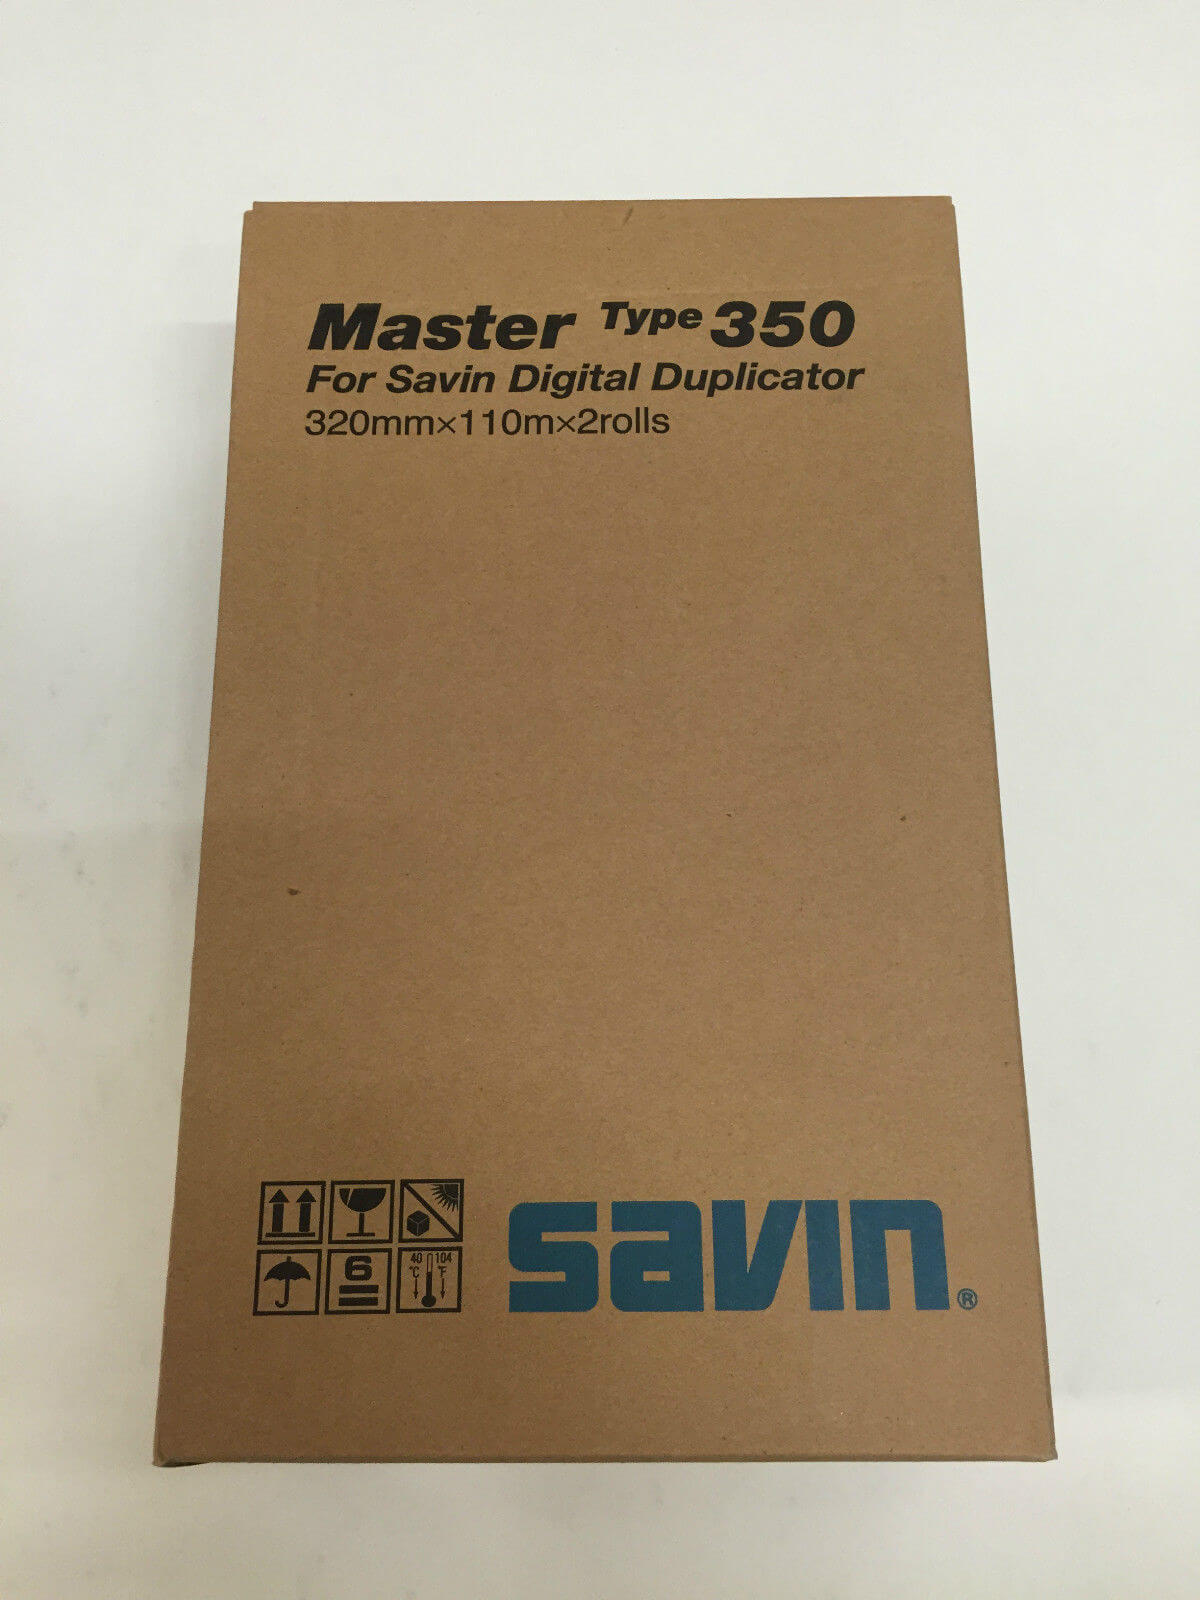 New OEM Genuine Savin Master 350 2 rolls 4555 893021 for Digital Duplicator - copier-clearance-center